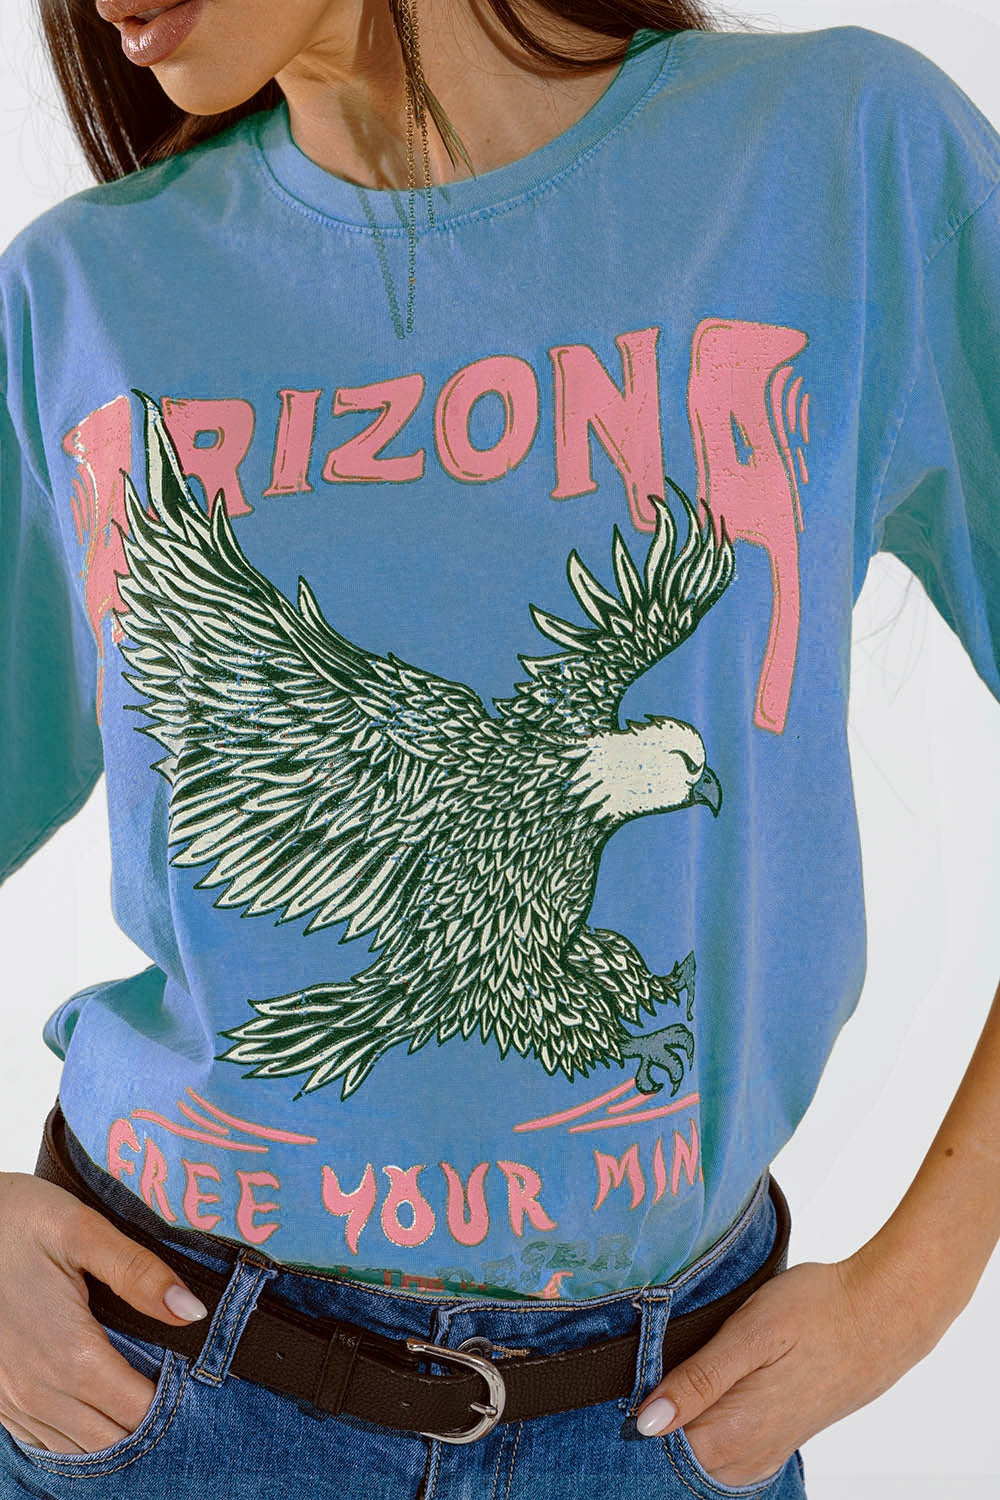 Arizona T-Shirt with Eagle Digital Print in Blue